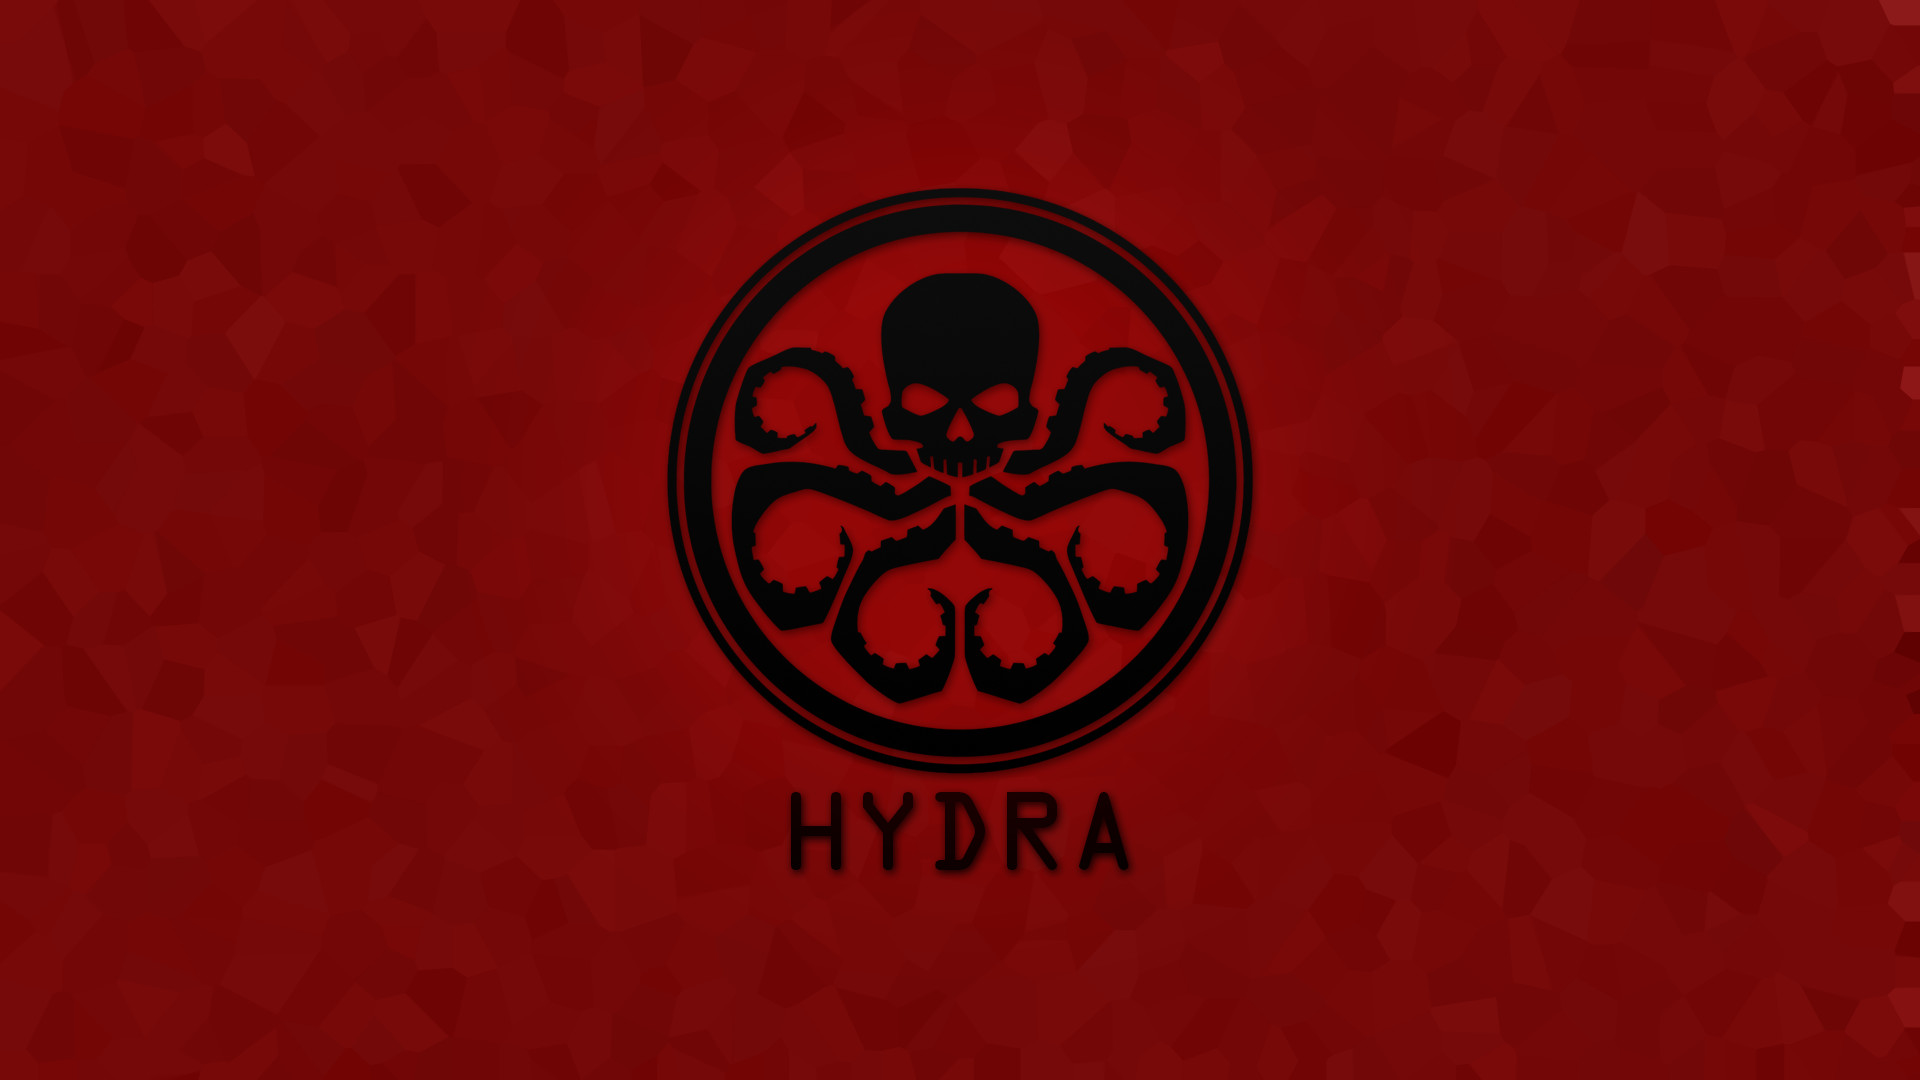 1920x1080 Wallpaper - Hydra by desous on DeviantArt